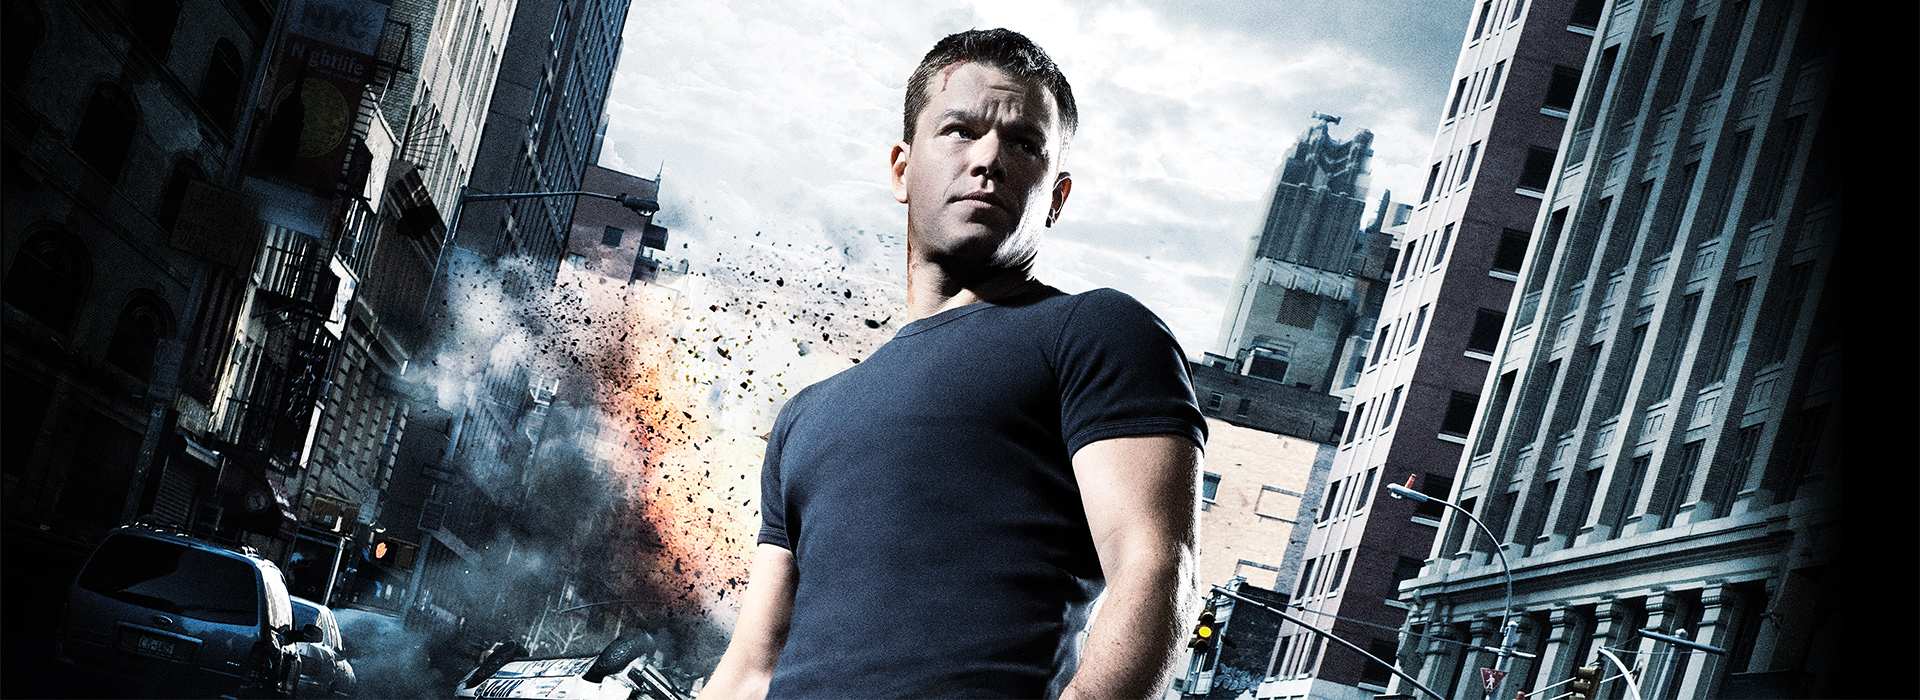 Movie poster The Bourne Ultimatum